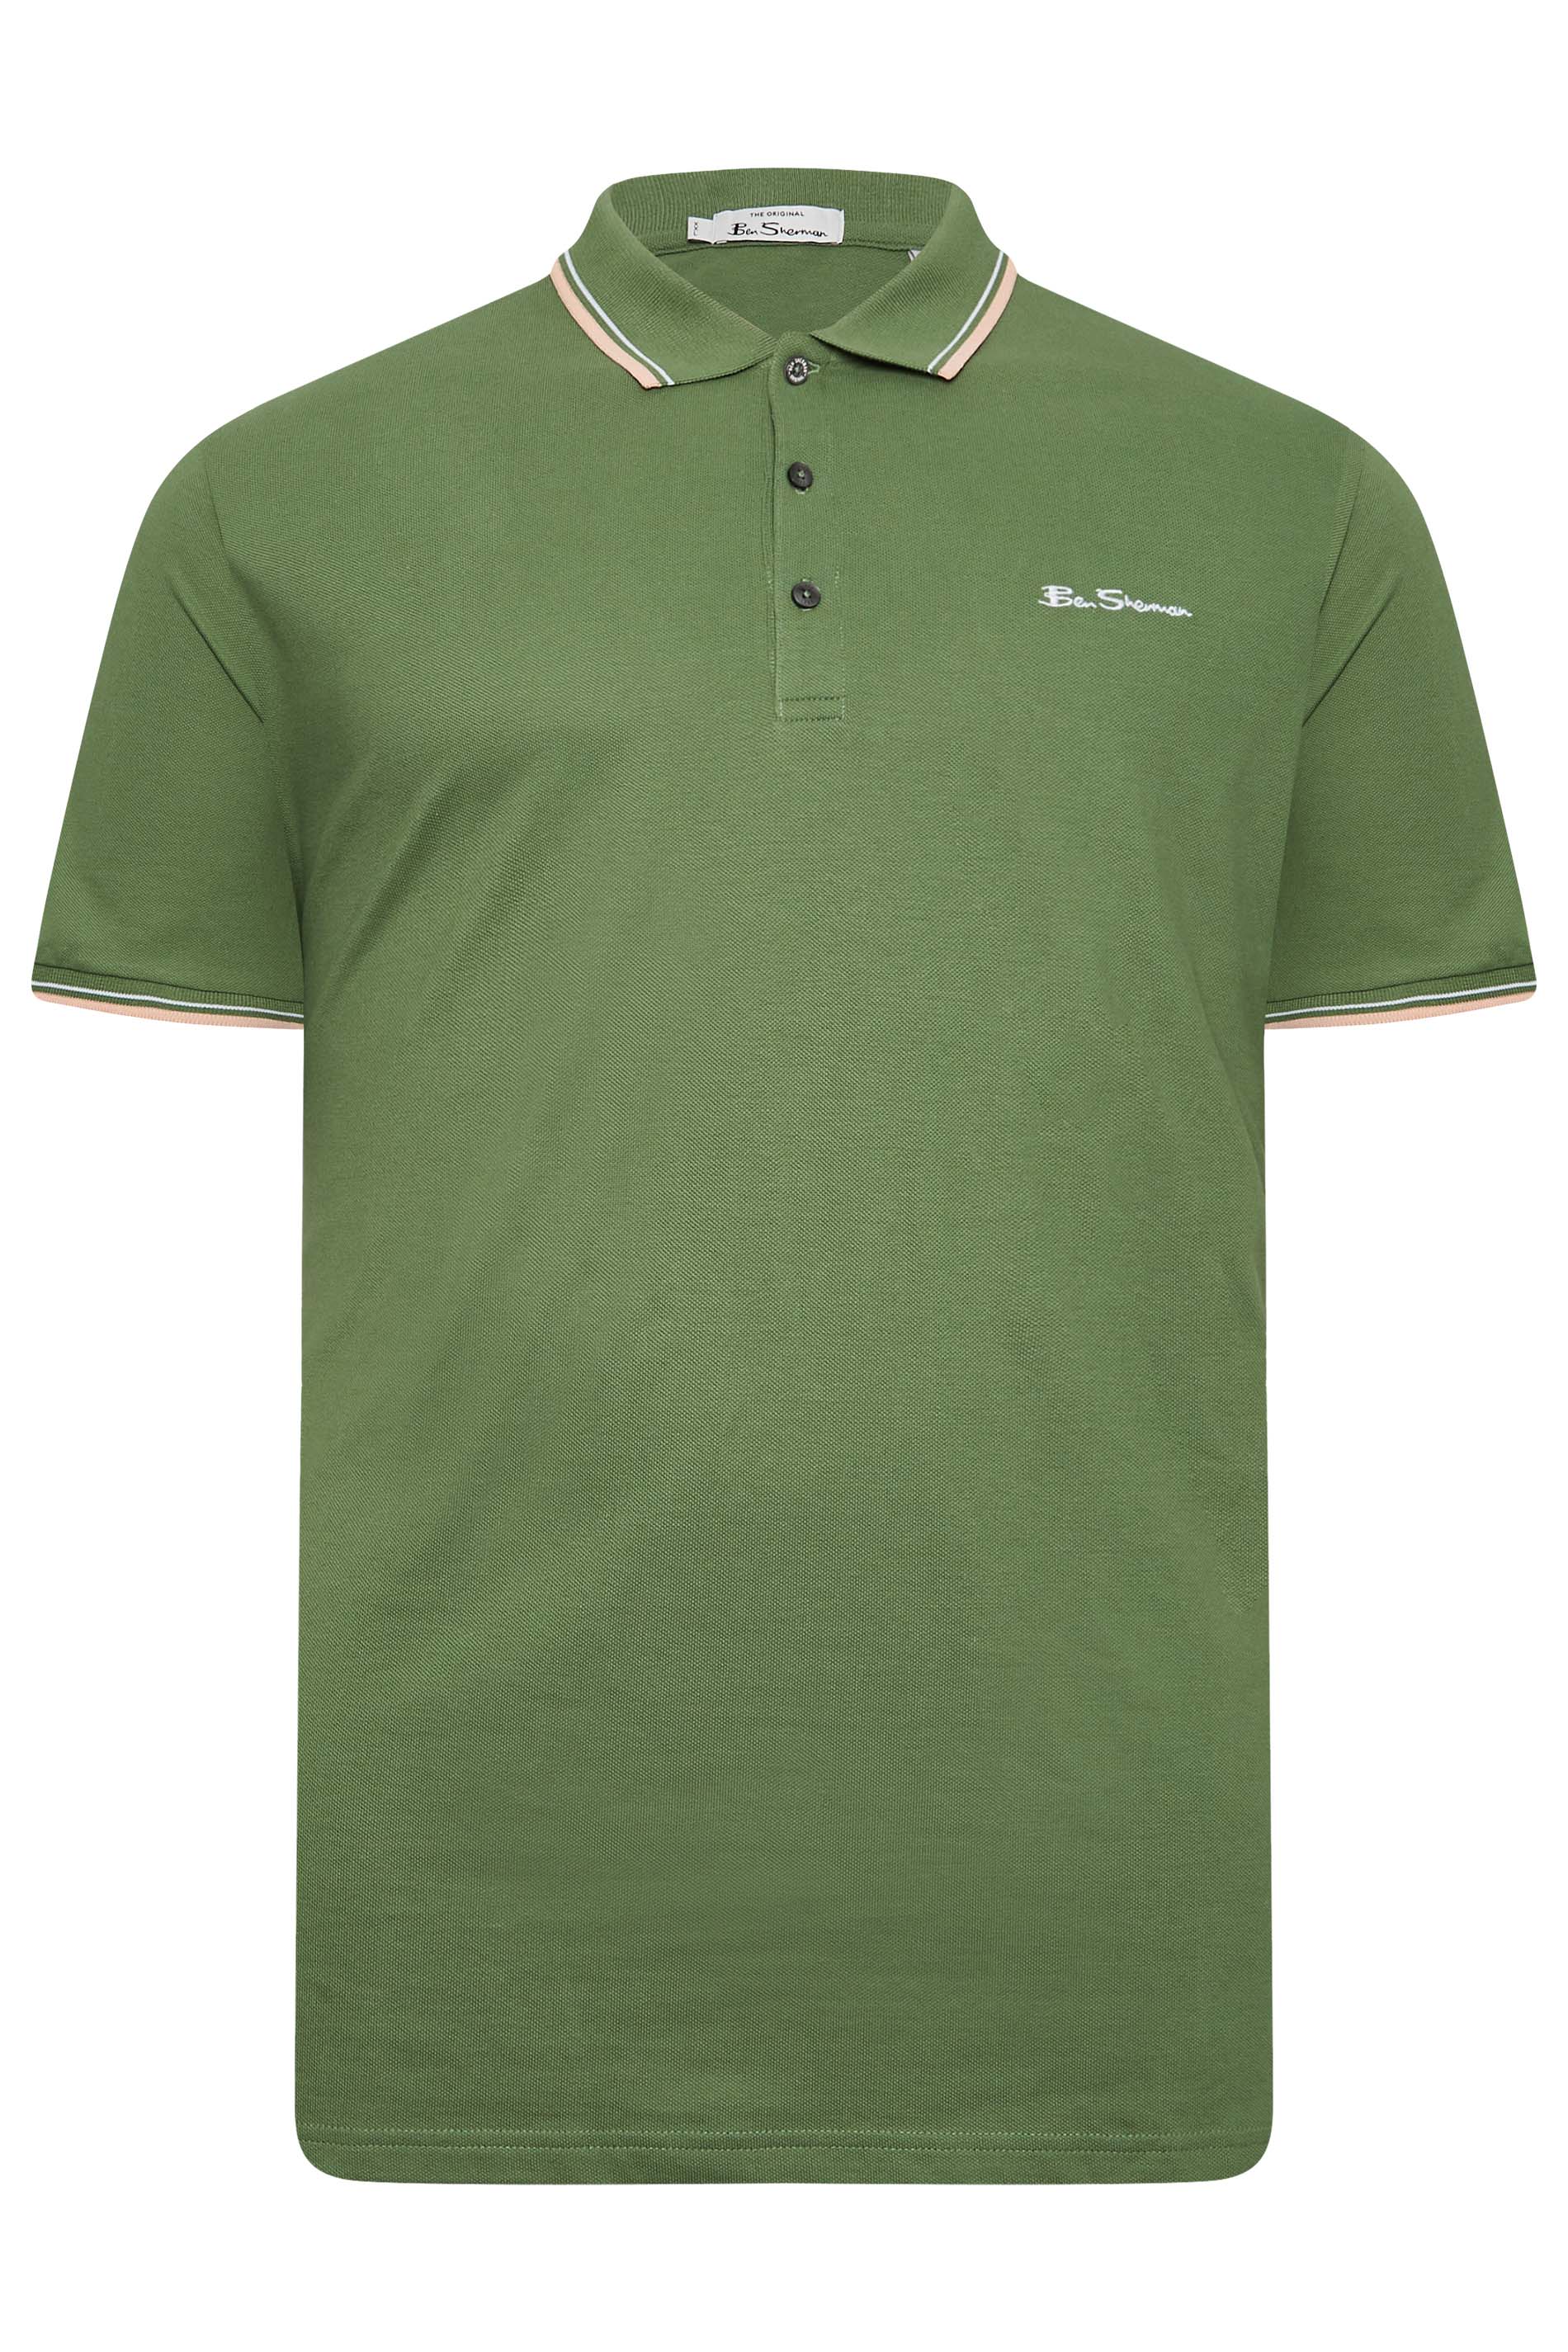 BEN SHERMAN Big & Tall Rich Fern Green Signature Tipped Polo Shirt | BadRhino  3